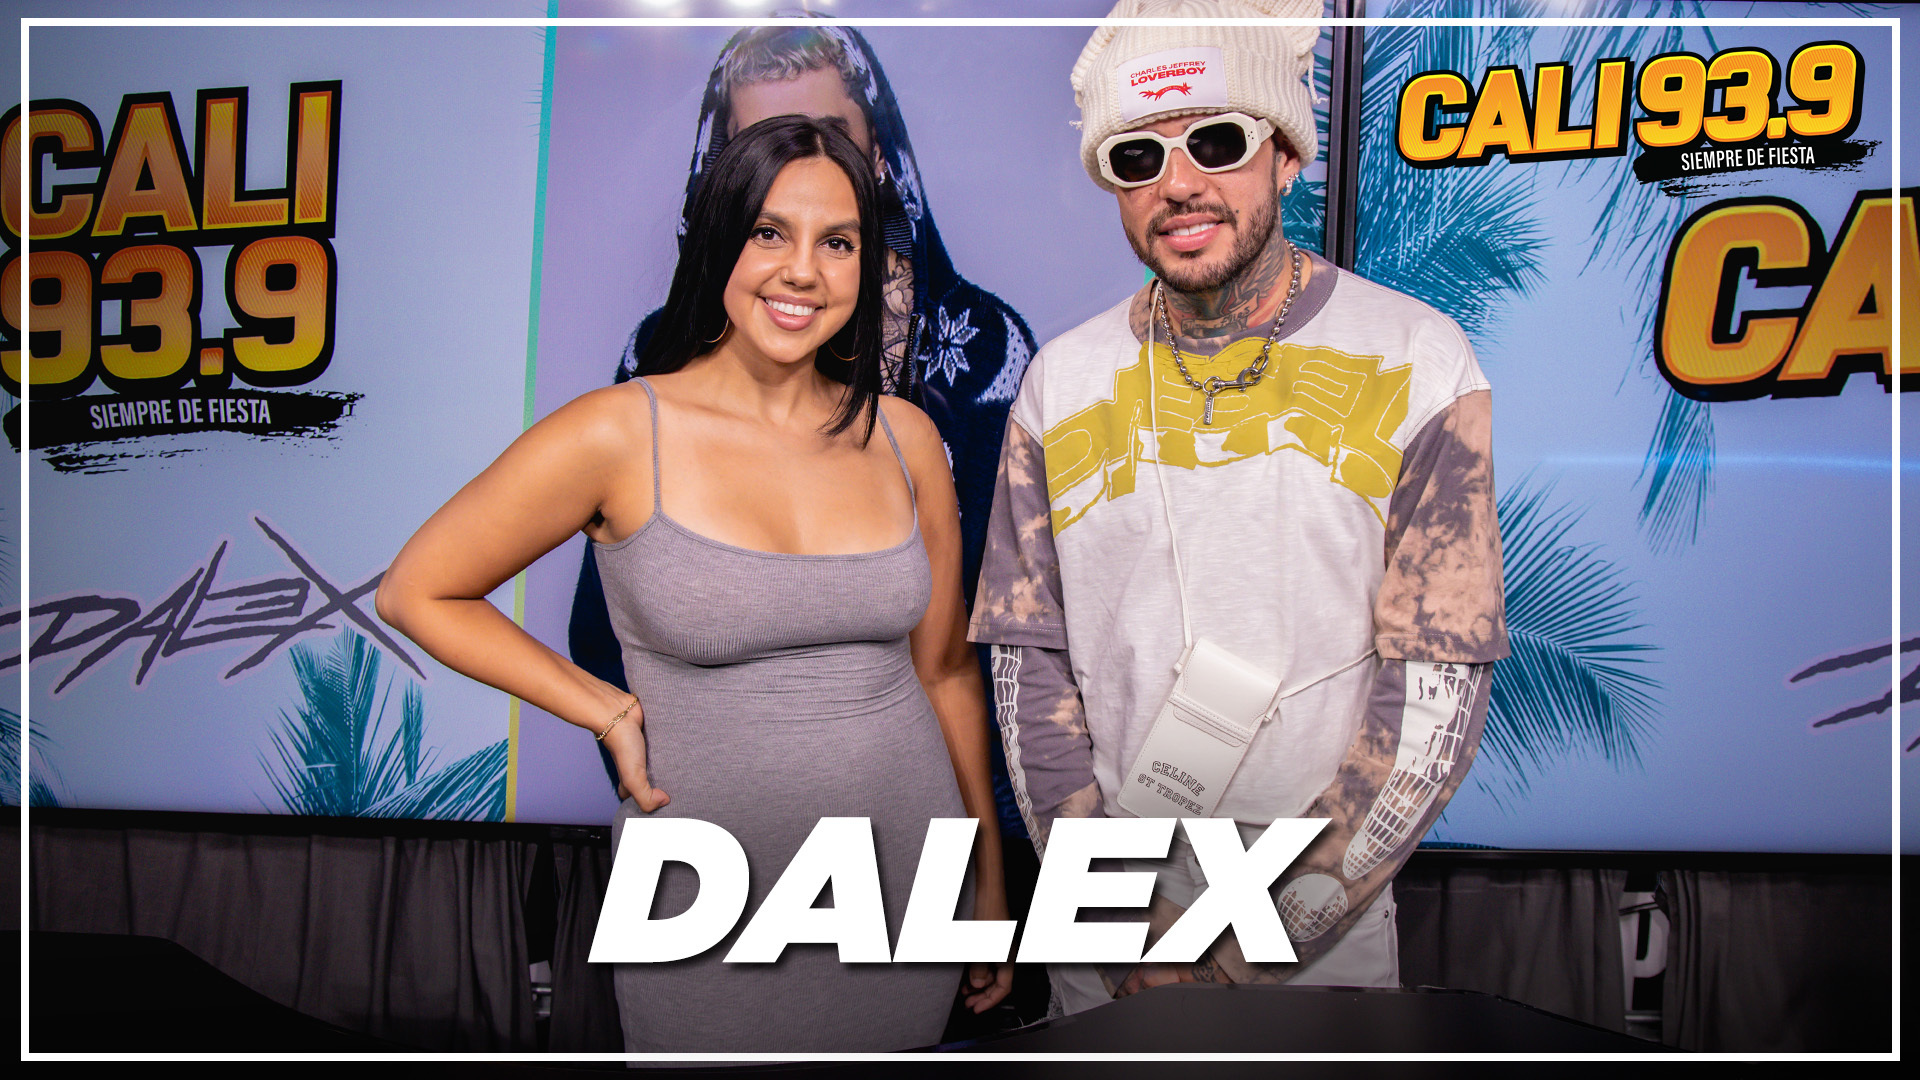 Dalex Karaokes to Selena Quintanilla & Talks New Projects